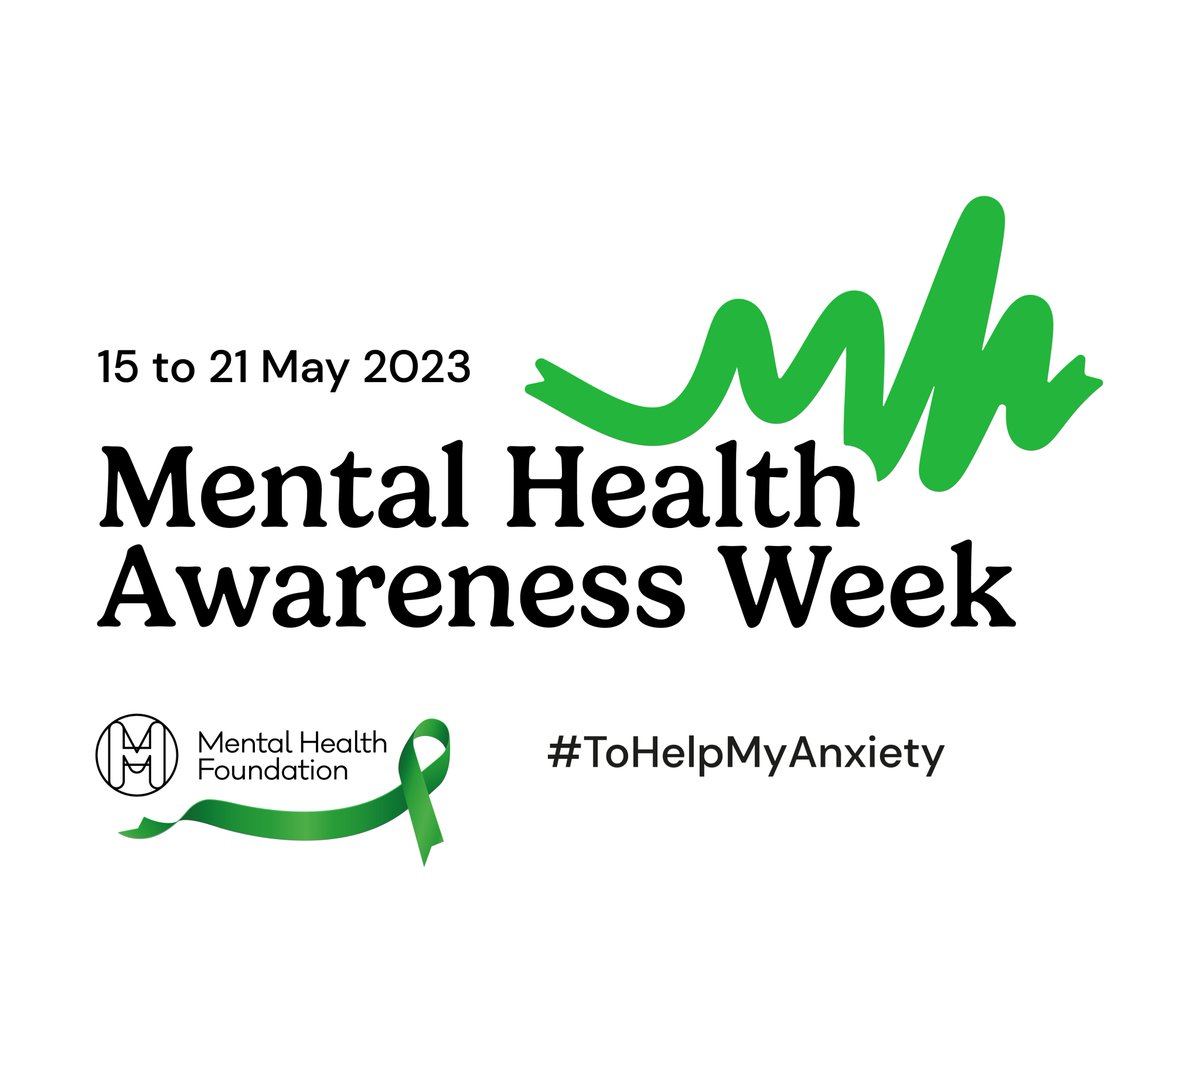 It's #MentalHealthAwarenessWeek. @mentalhealth have got some great resources on managing #anxiety mentalhealth.org.uk/our-work/publi…. @mindcharity are focusing on impact of #CostOfLivingCrisis on #MentalHealth mind.org.uk/get-involved/m… 💚#ToHelpMyAnxiety #MentalHealth #TimeToTalk #EndStigma